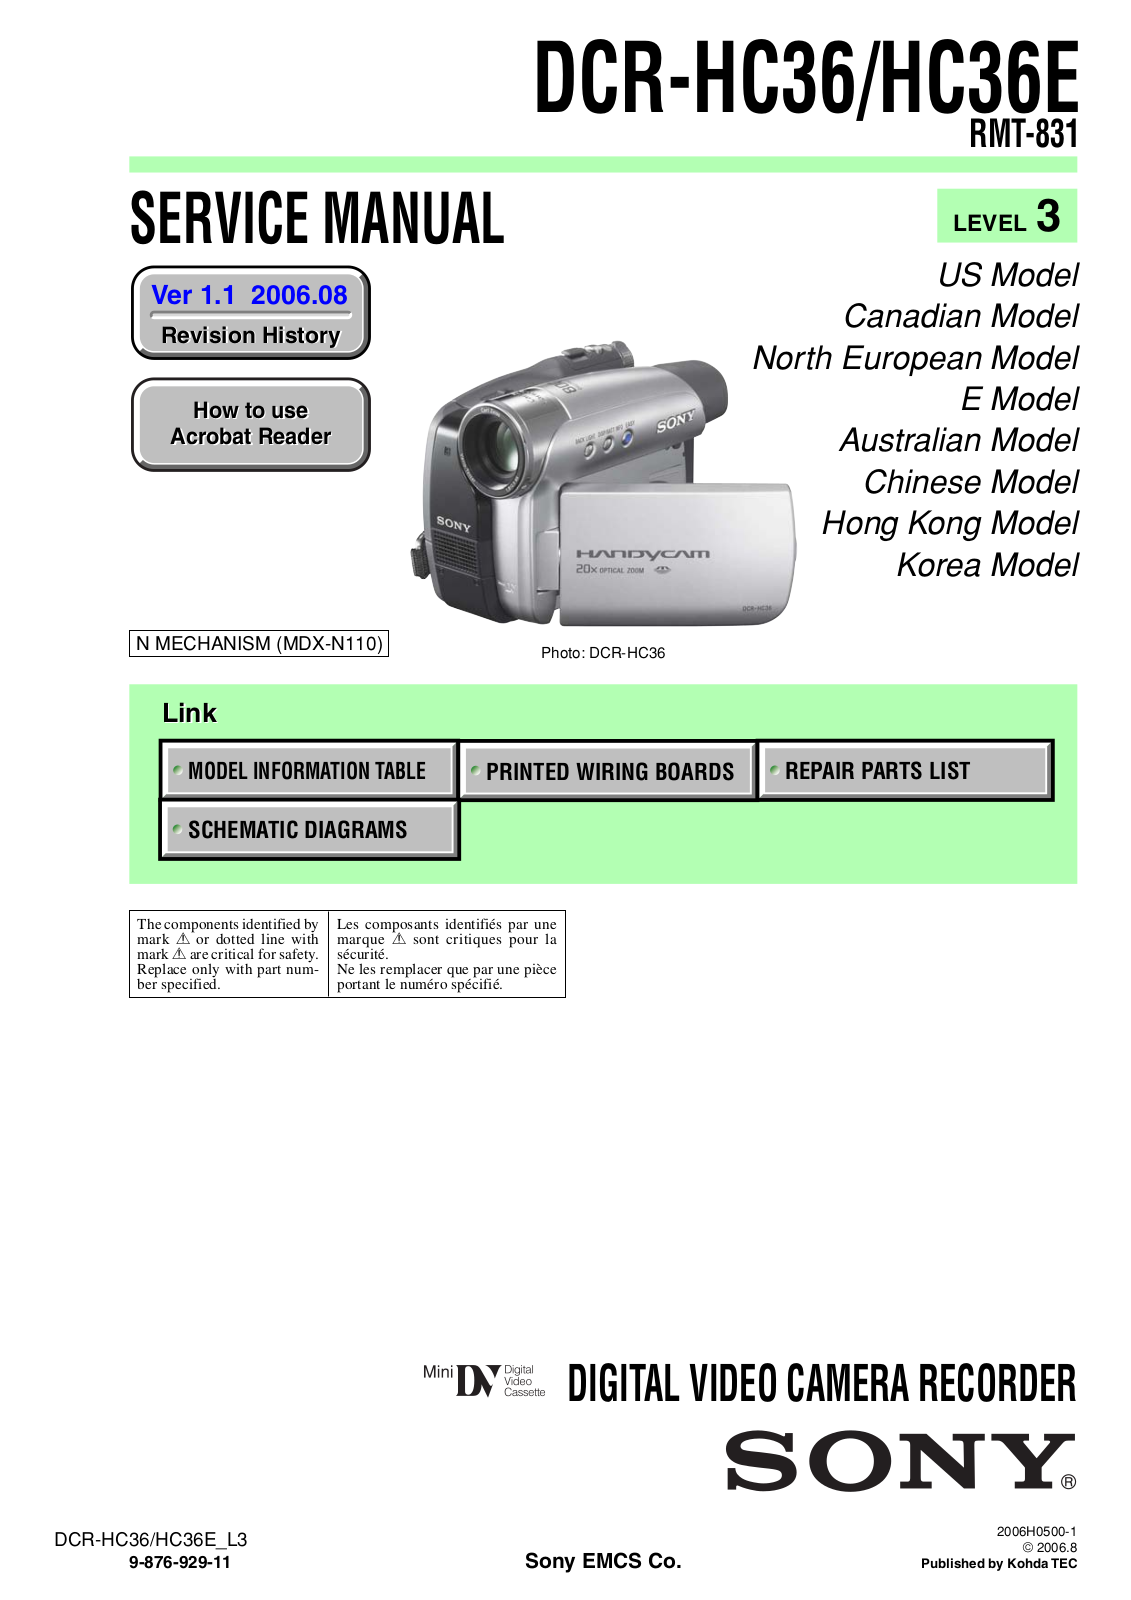 SONY DCR-HC36, DCR-HC36E Service Manual Level 3